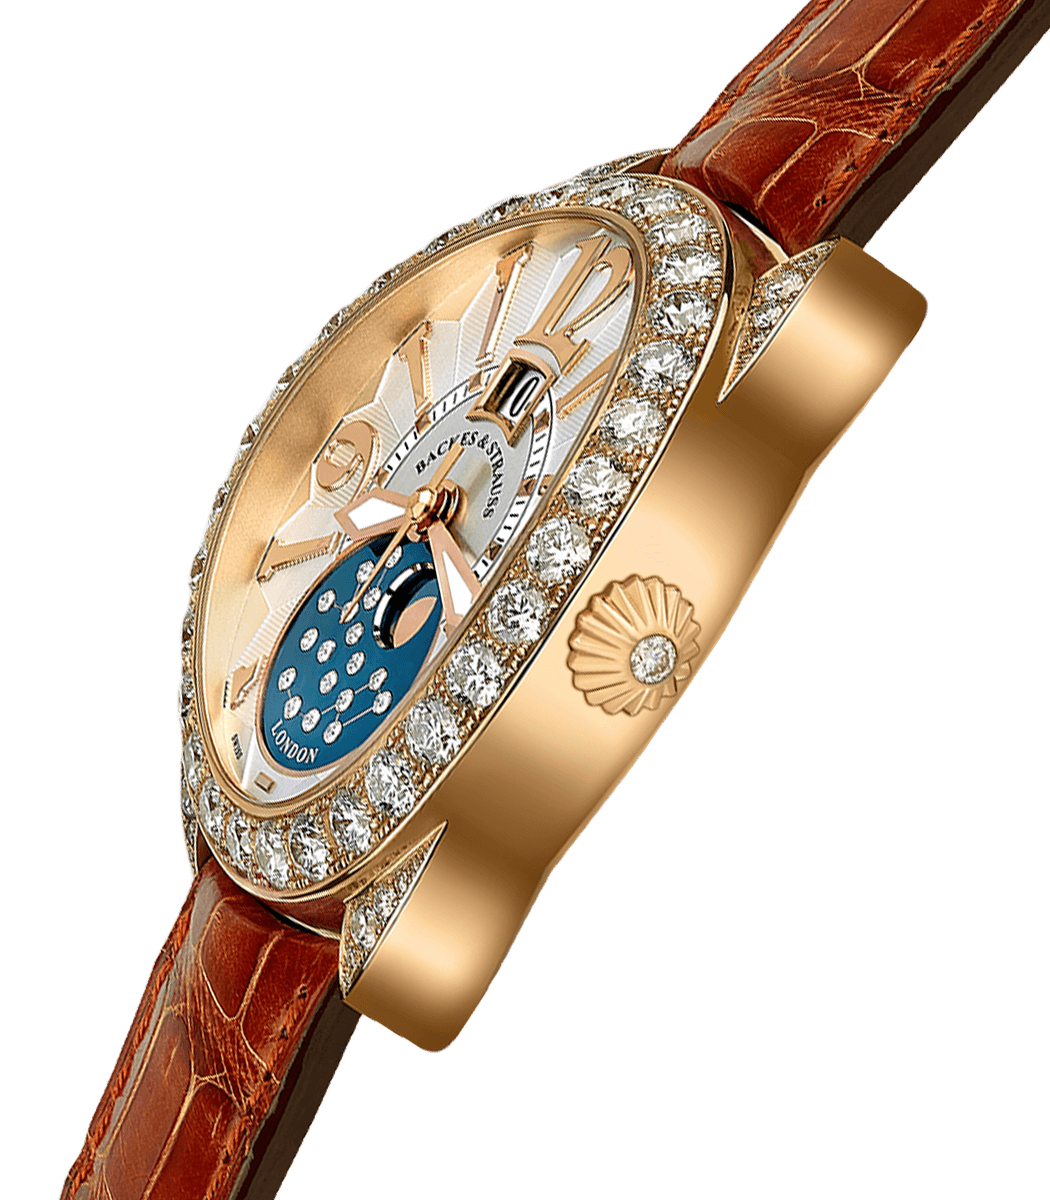 Regent 1609 AD 4047 limited edition diamond watch side-shot